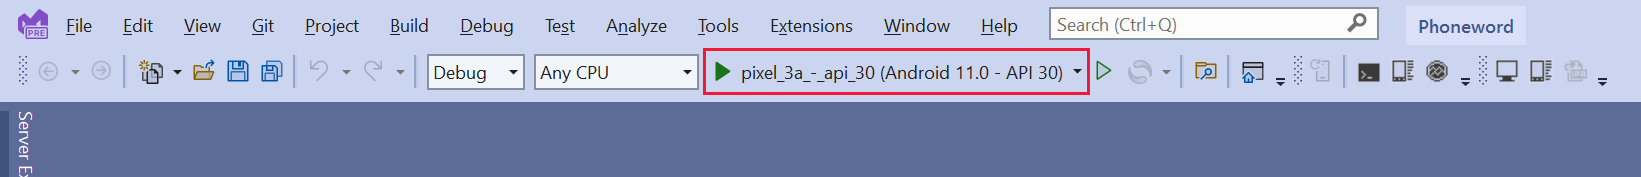 Visual Studio 工具栏的屏幕截图。图中显示已选中 pixel_3a-api_30 配置文件，并准备好在用户按下“开始”按钮后立即开始调试。